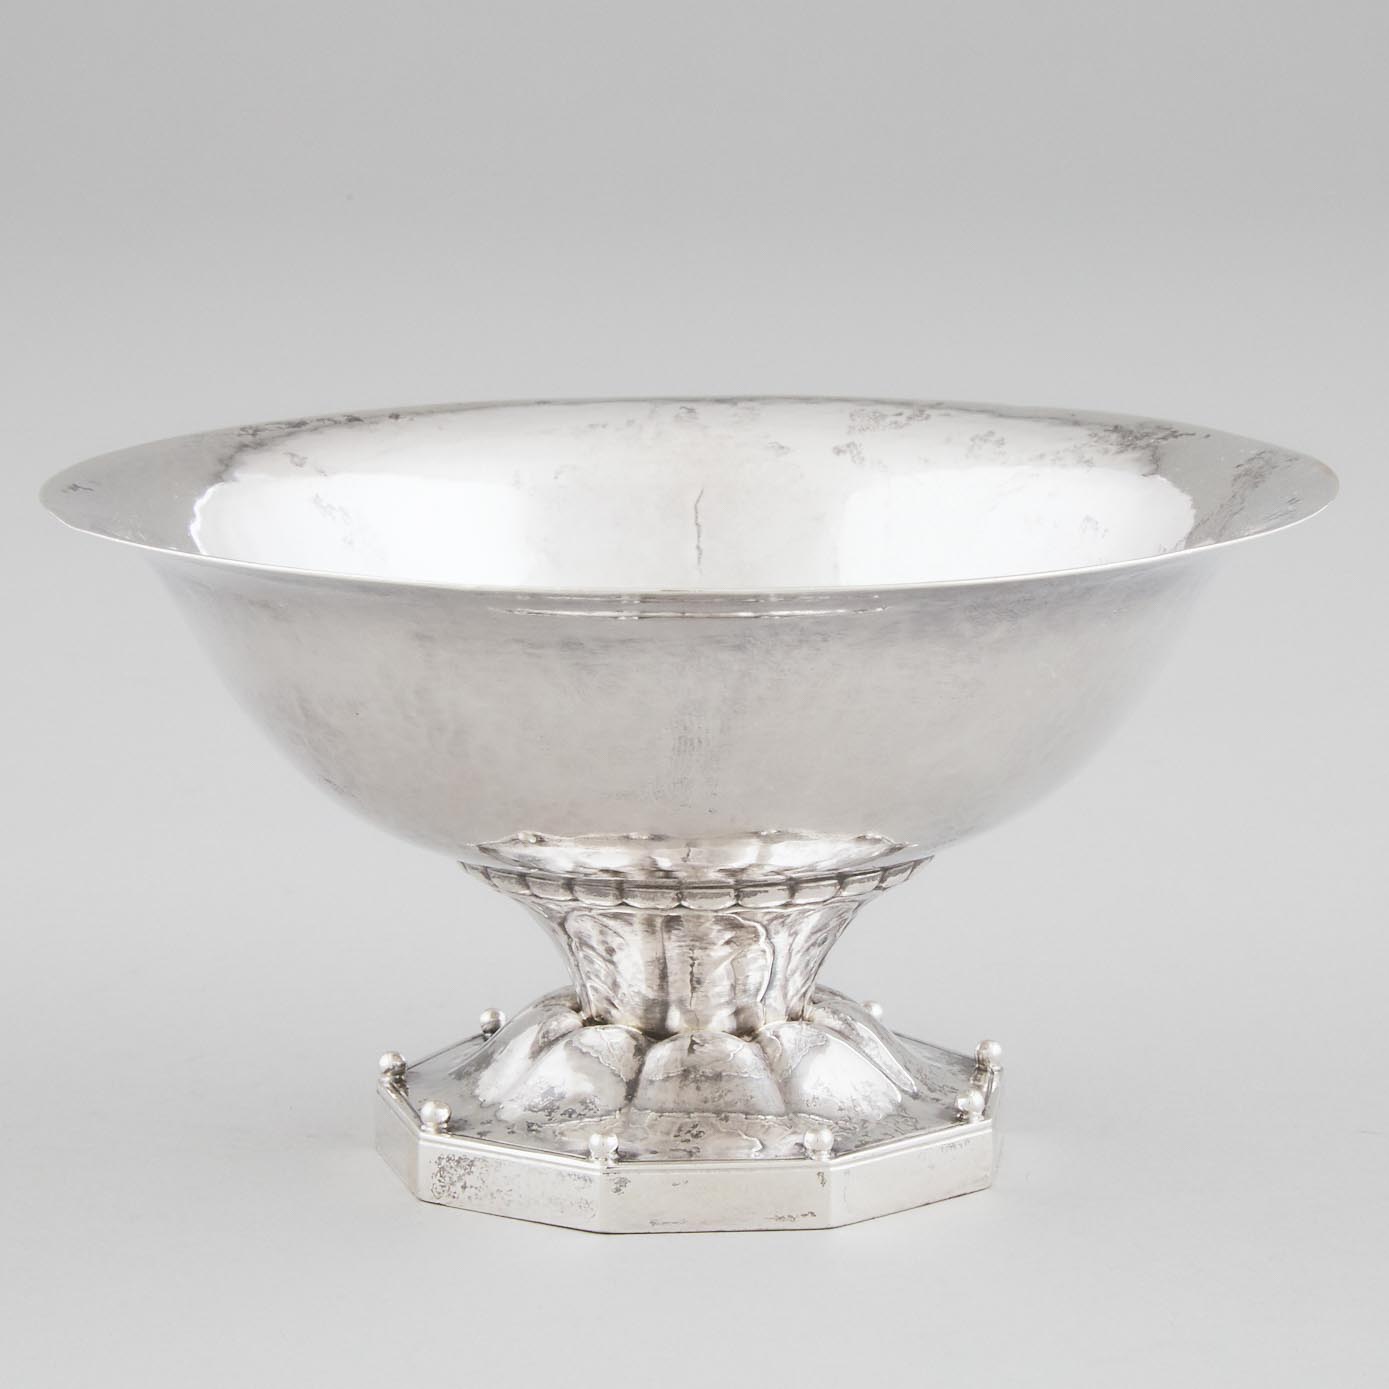 Danish Silver Footed Bowl, #181B, Georg Jensen, Copenhagen, 20th century